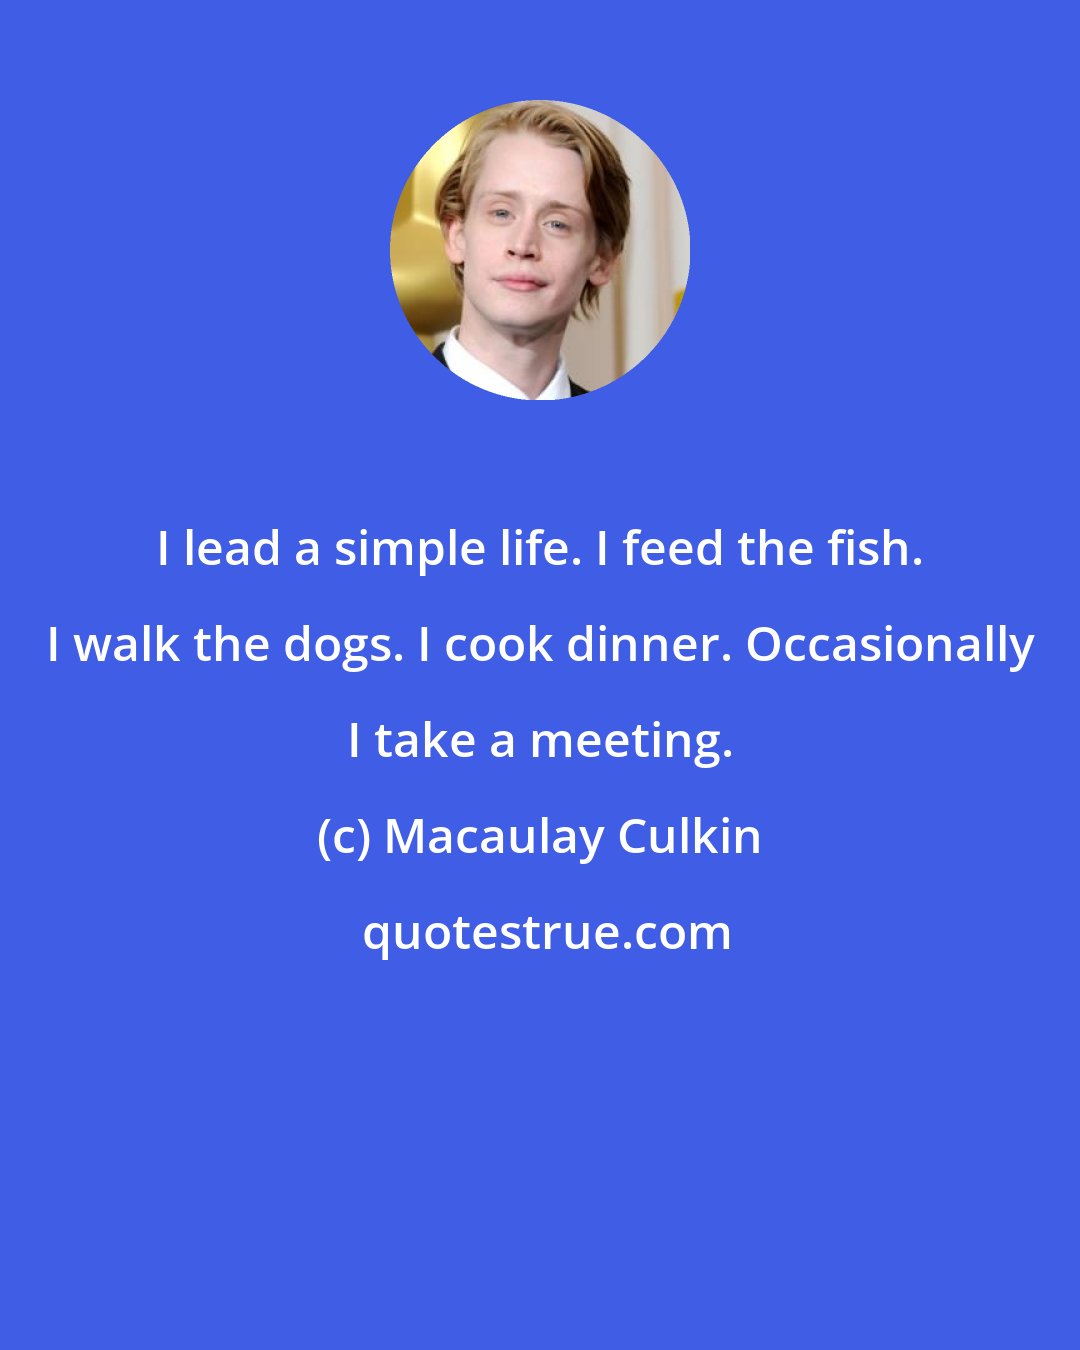 Macaulay Culkin: I lead a simple life. I feed the fish. I walk the dogs. I cook dinner. Occasionally I take a meeting.